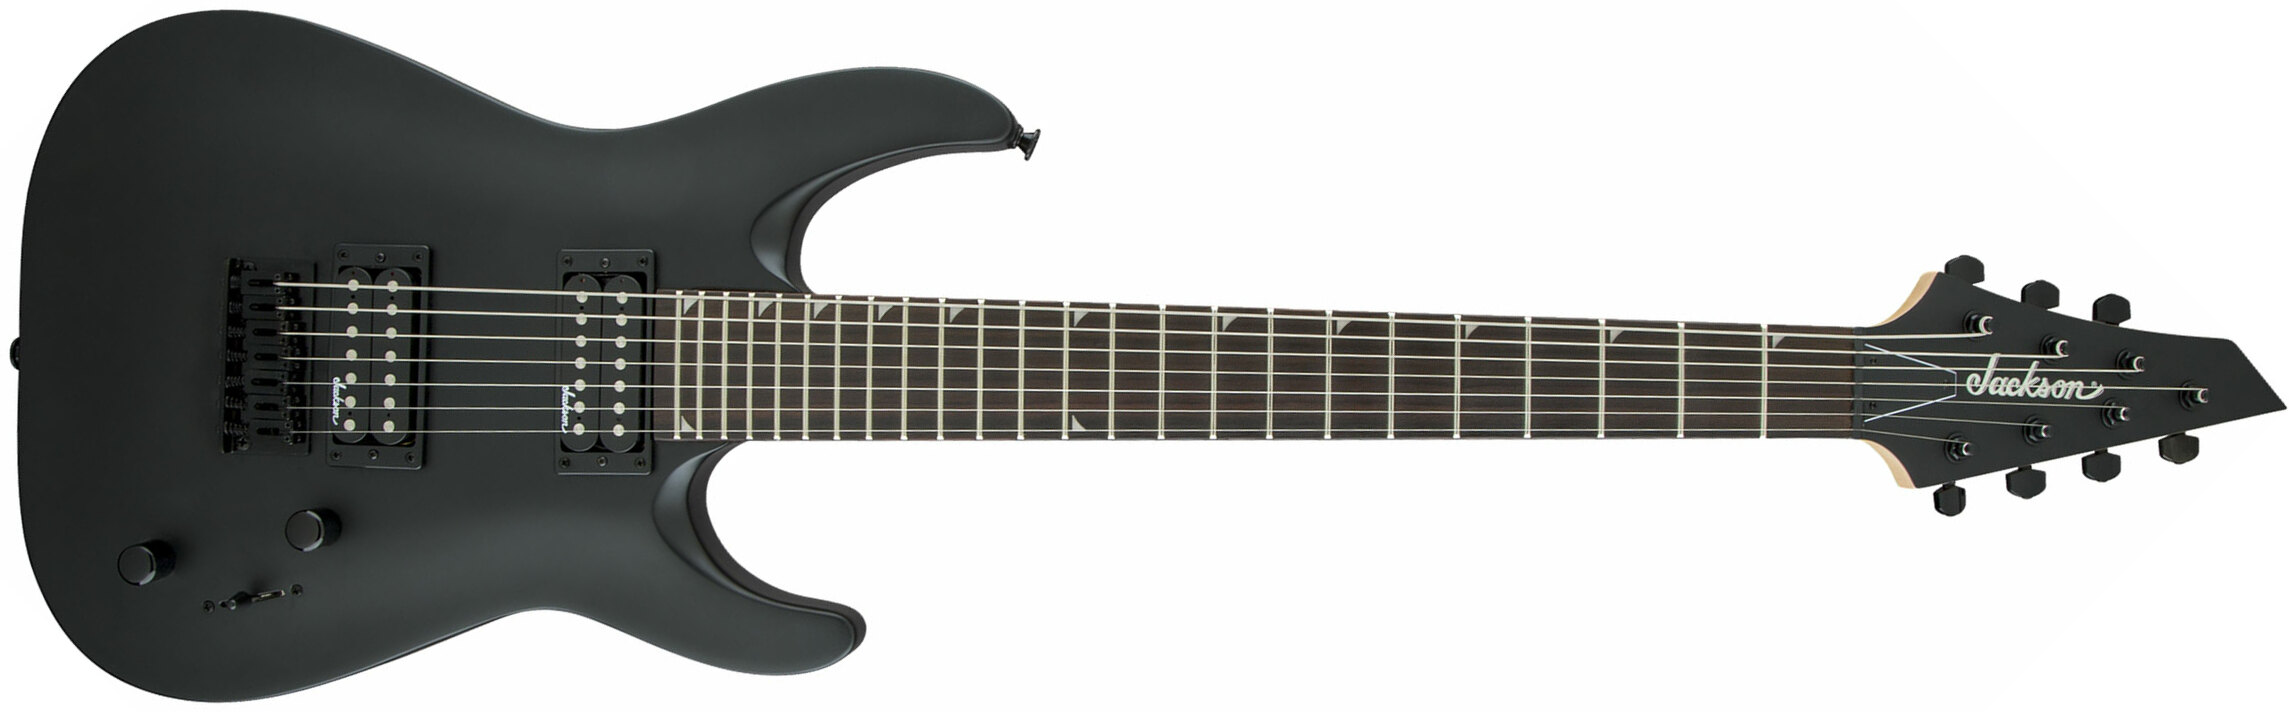 Jackson Dinky Archtop Js22-7 Dka 2h Ht Ama - Satin Black - 7 string electric guitar - Main picture